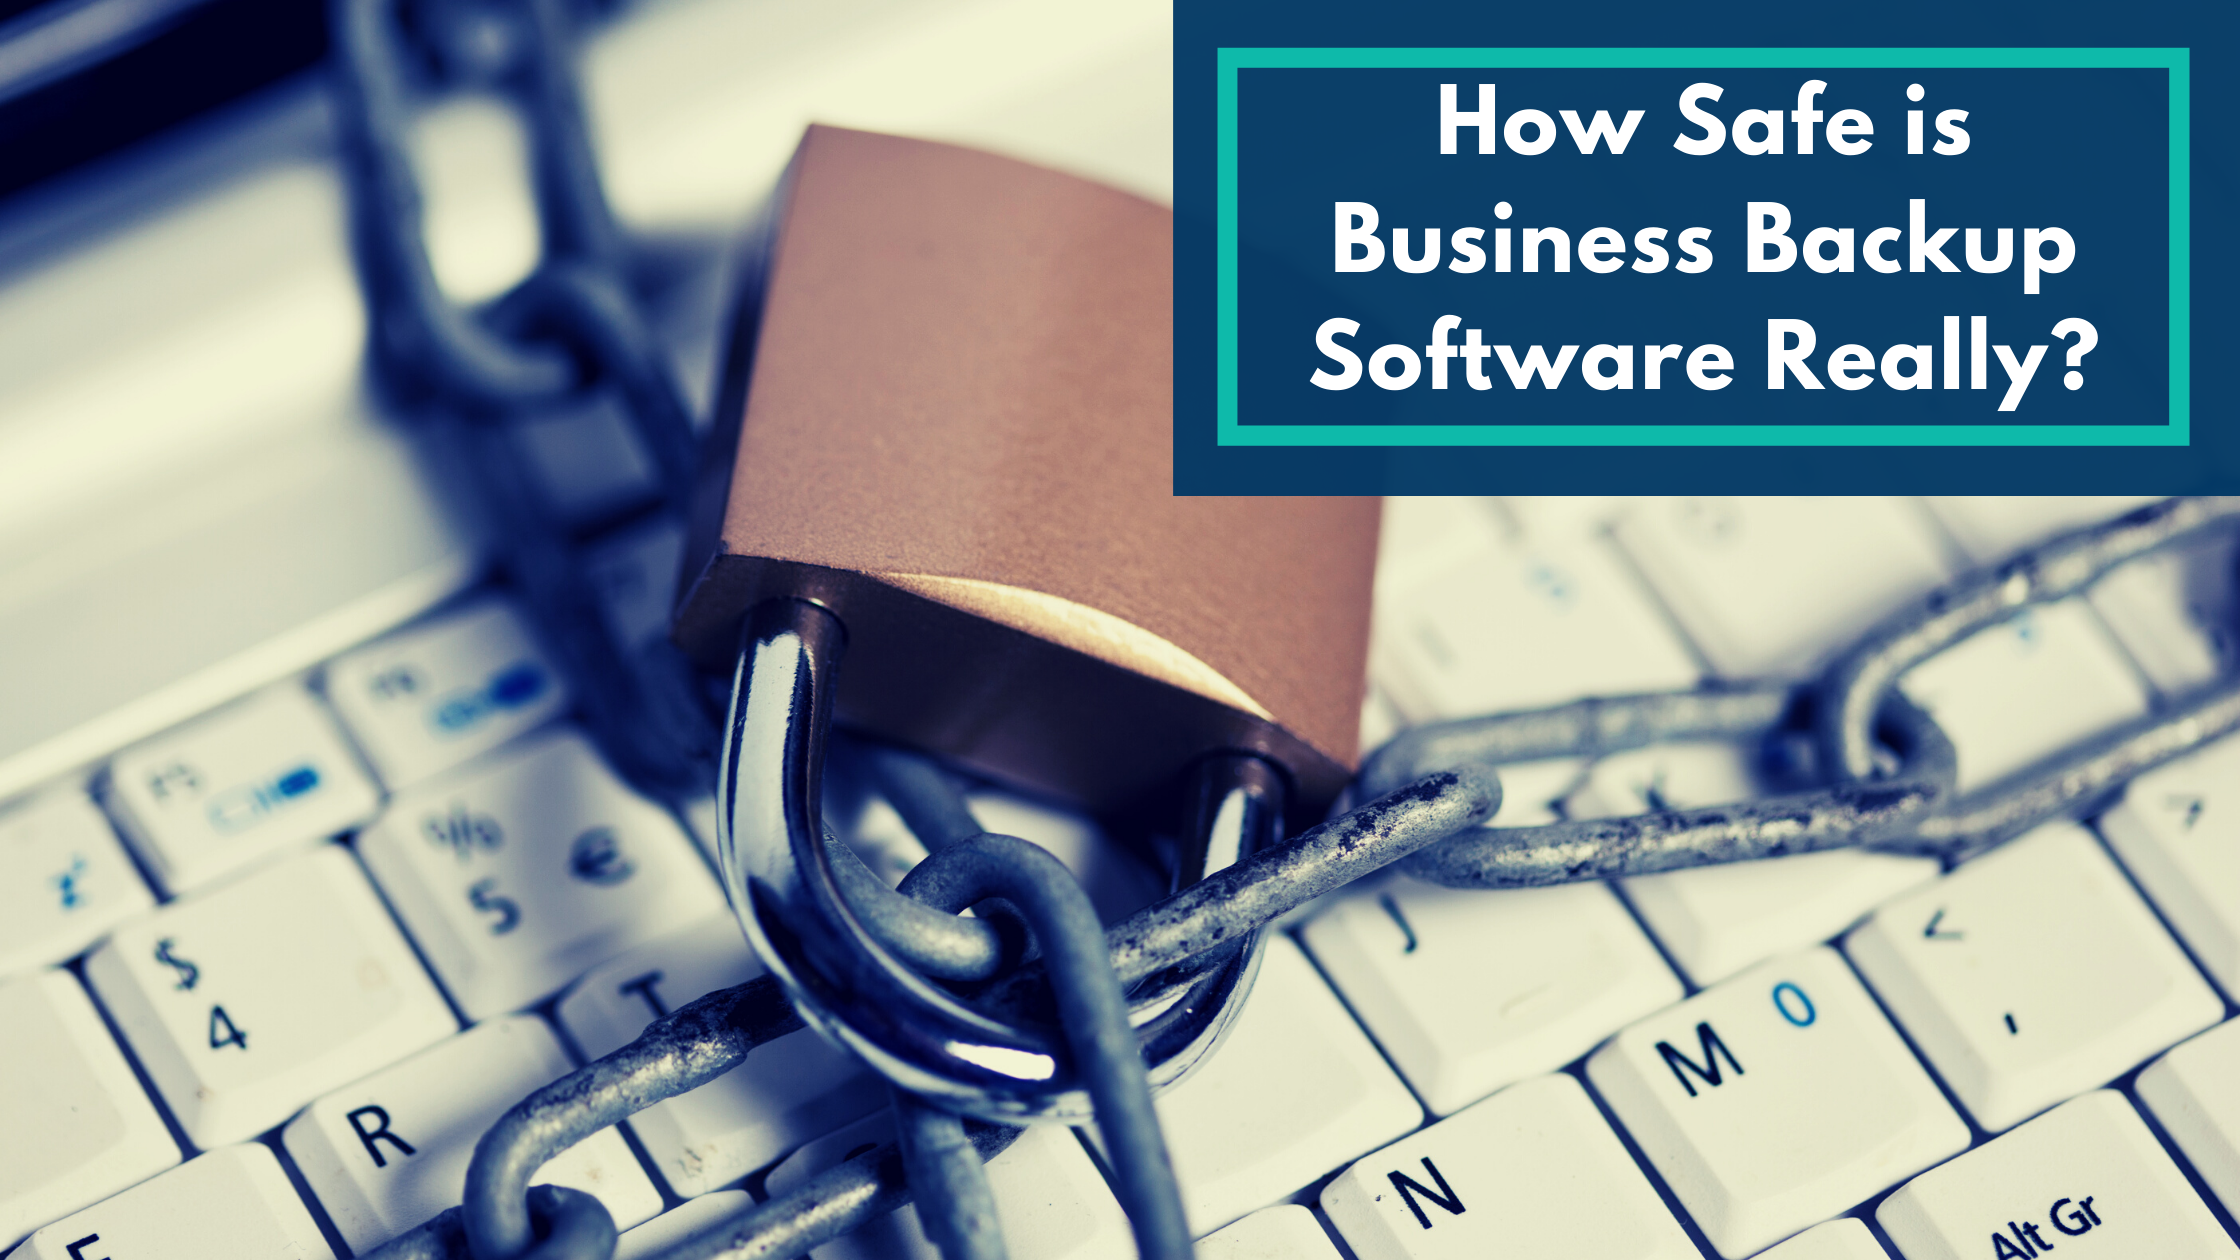 Business Backup Software